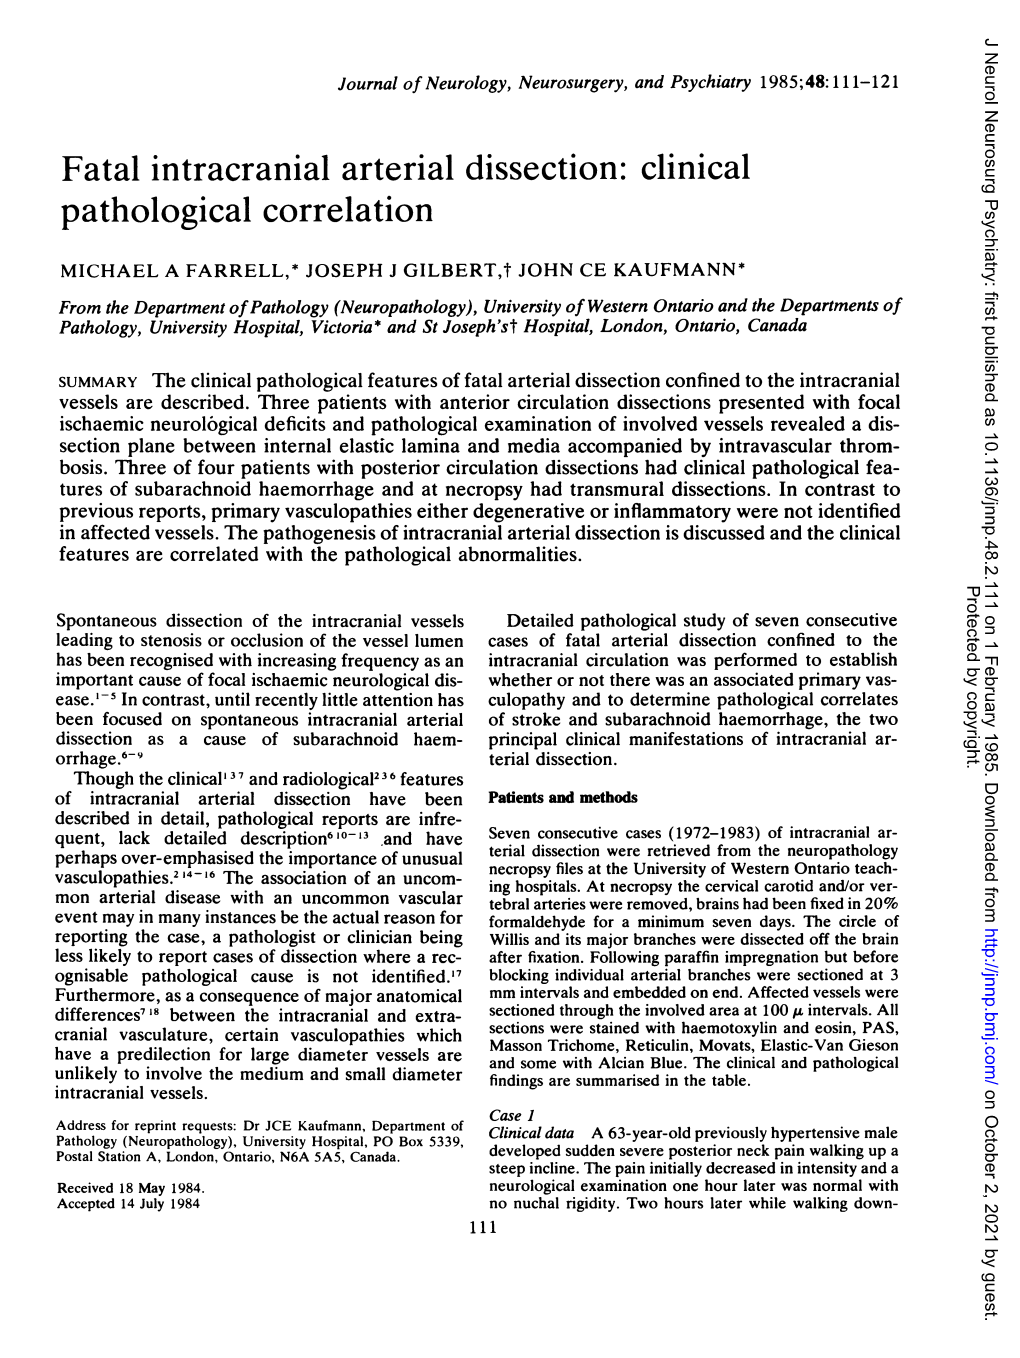 Fatal Intracranial Arterial Dissection: Clinical Pathological Correlation